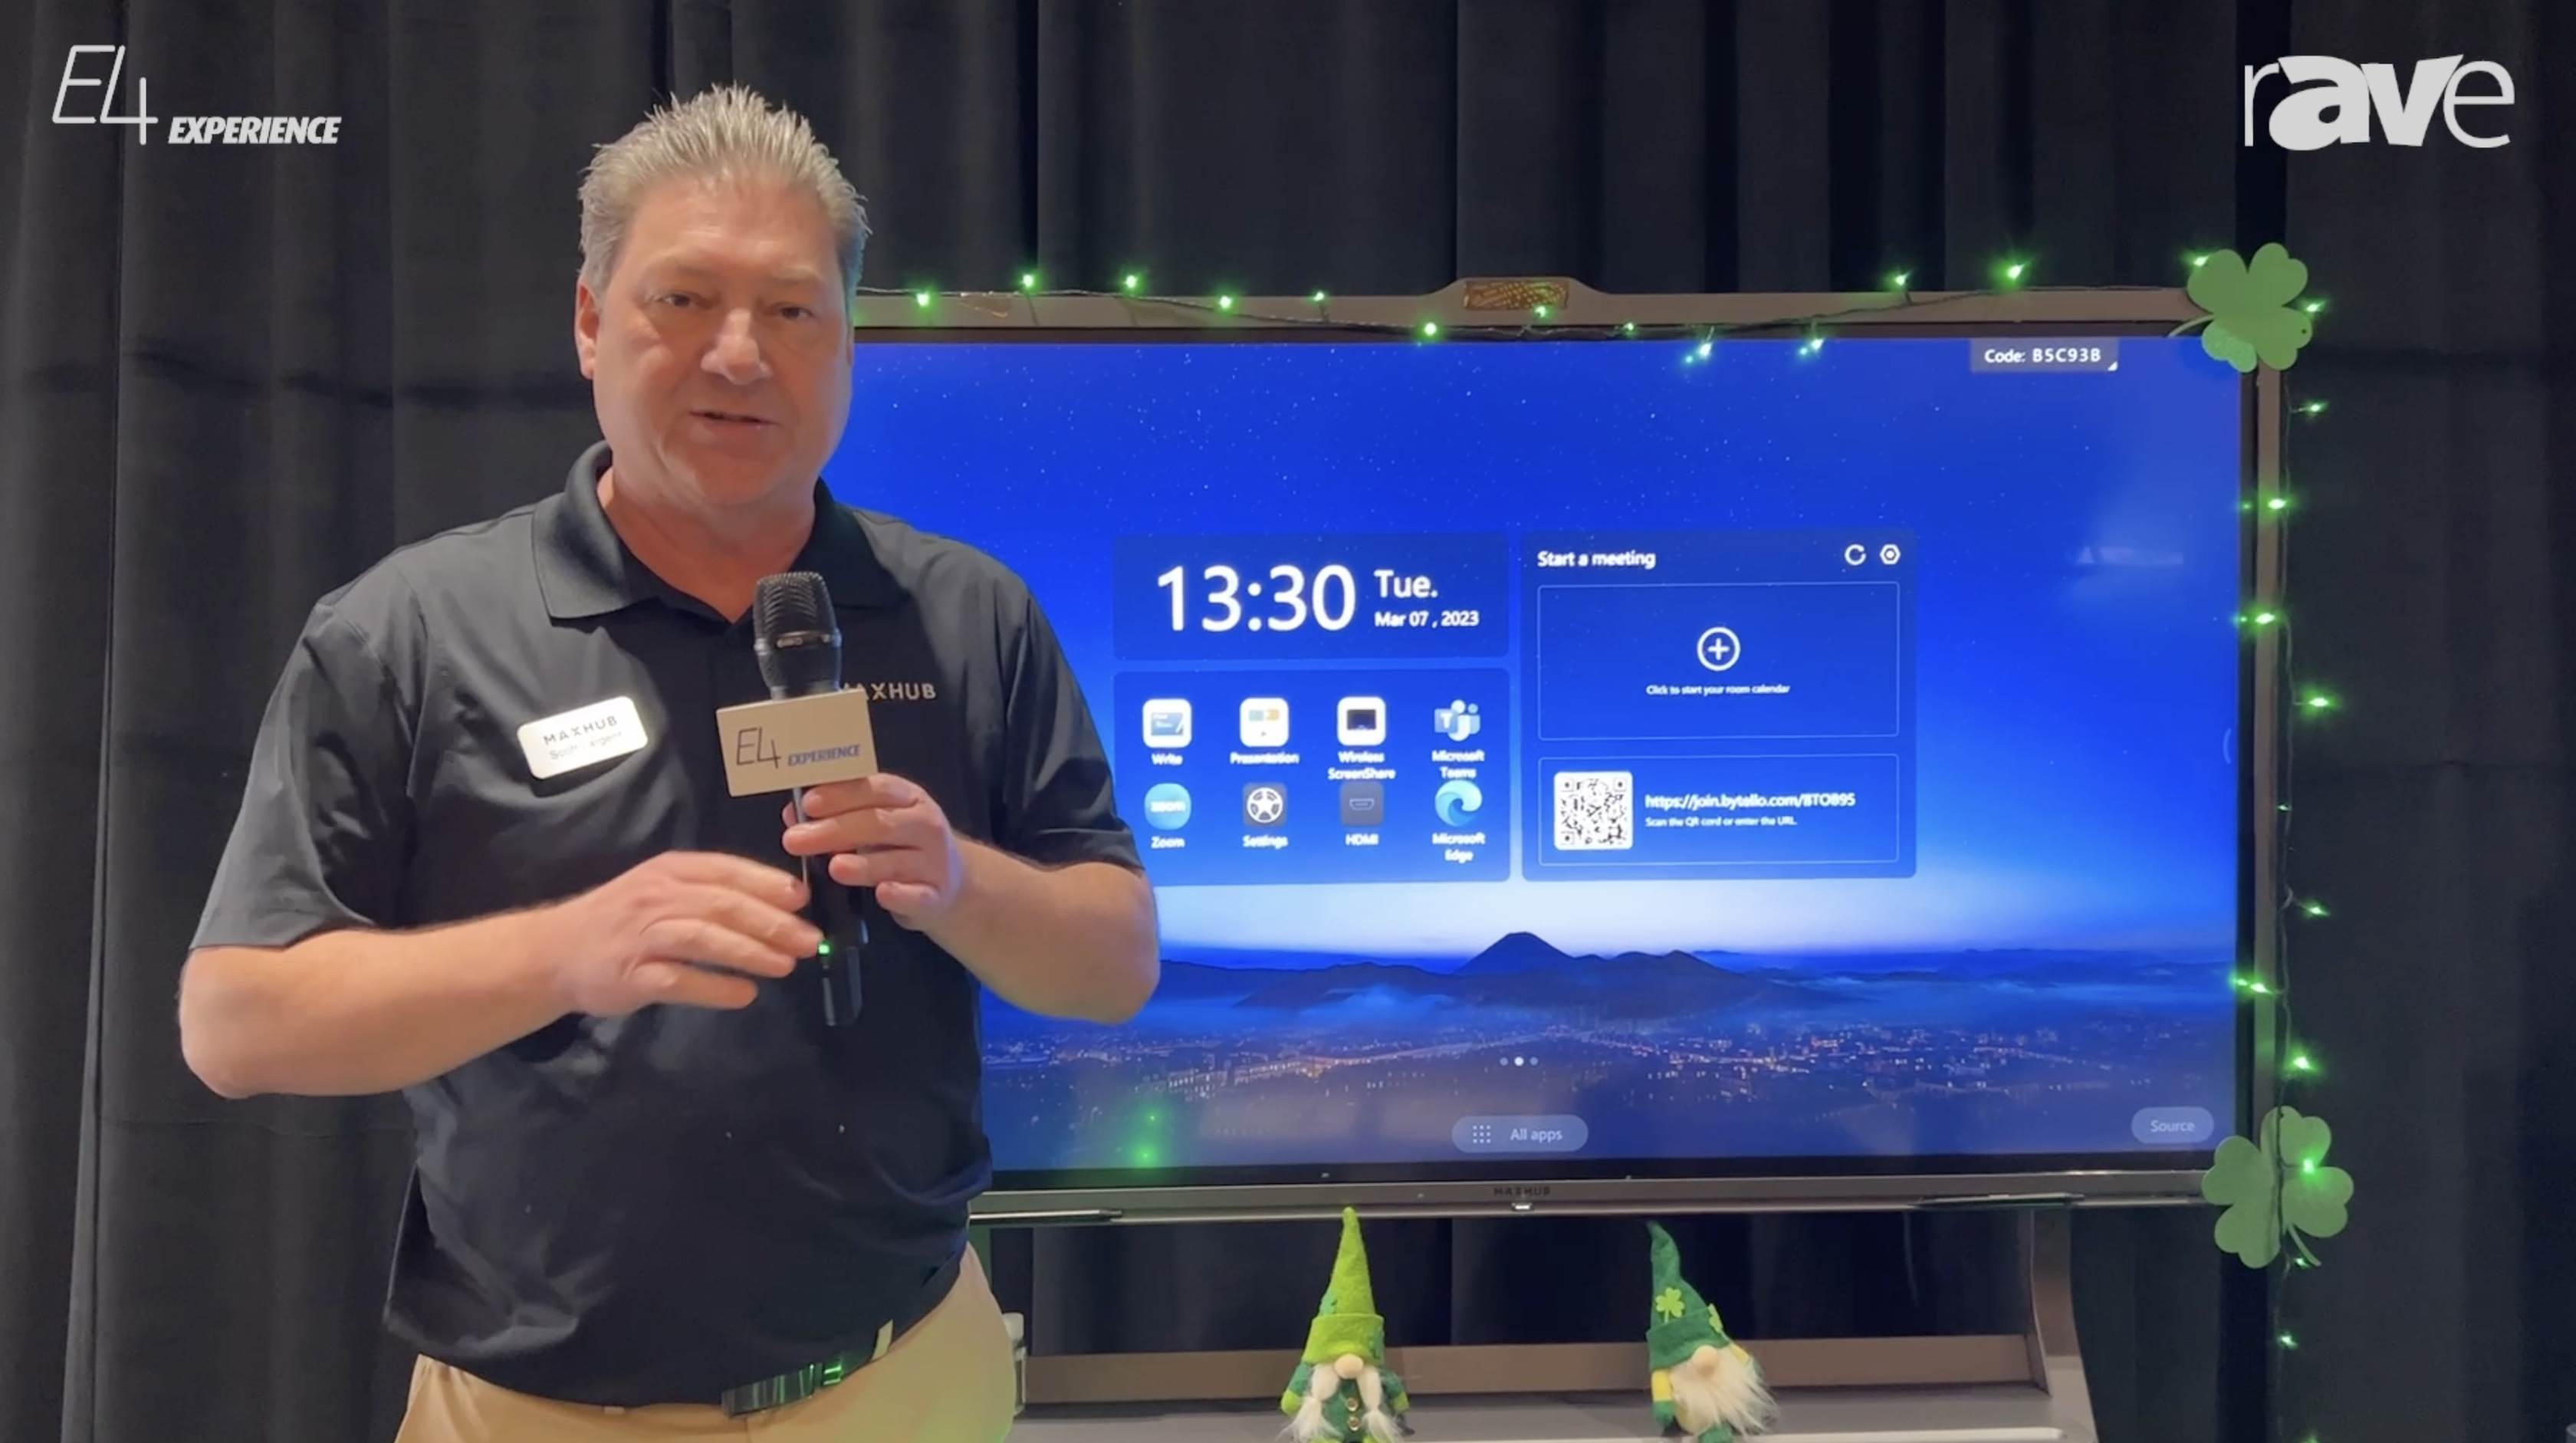 E4 Experience: MAXHUB Highlights V6 ViewPro Collaboration Display